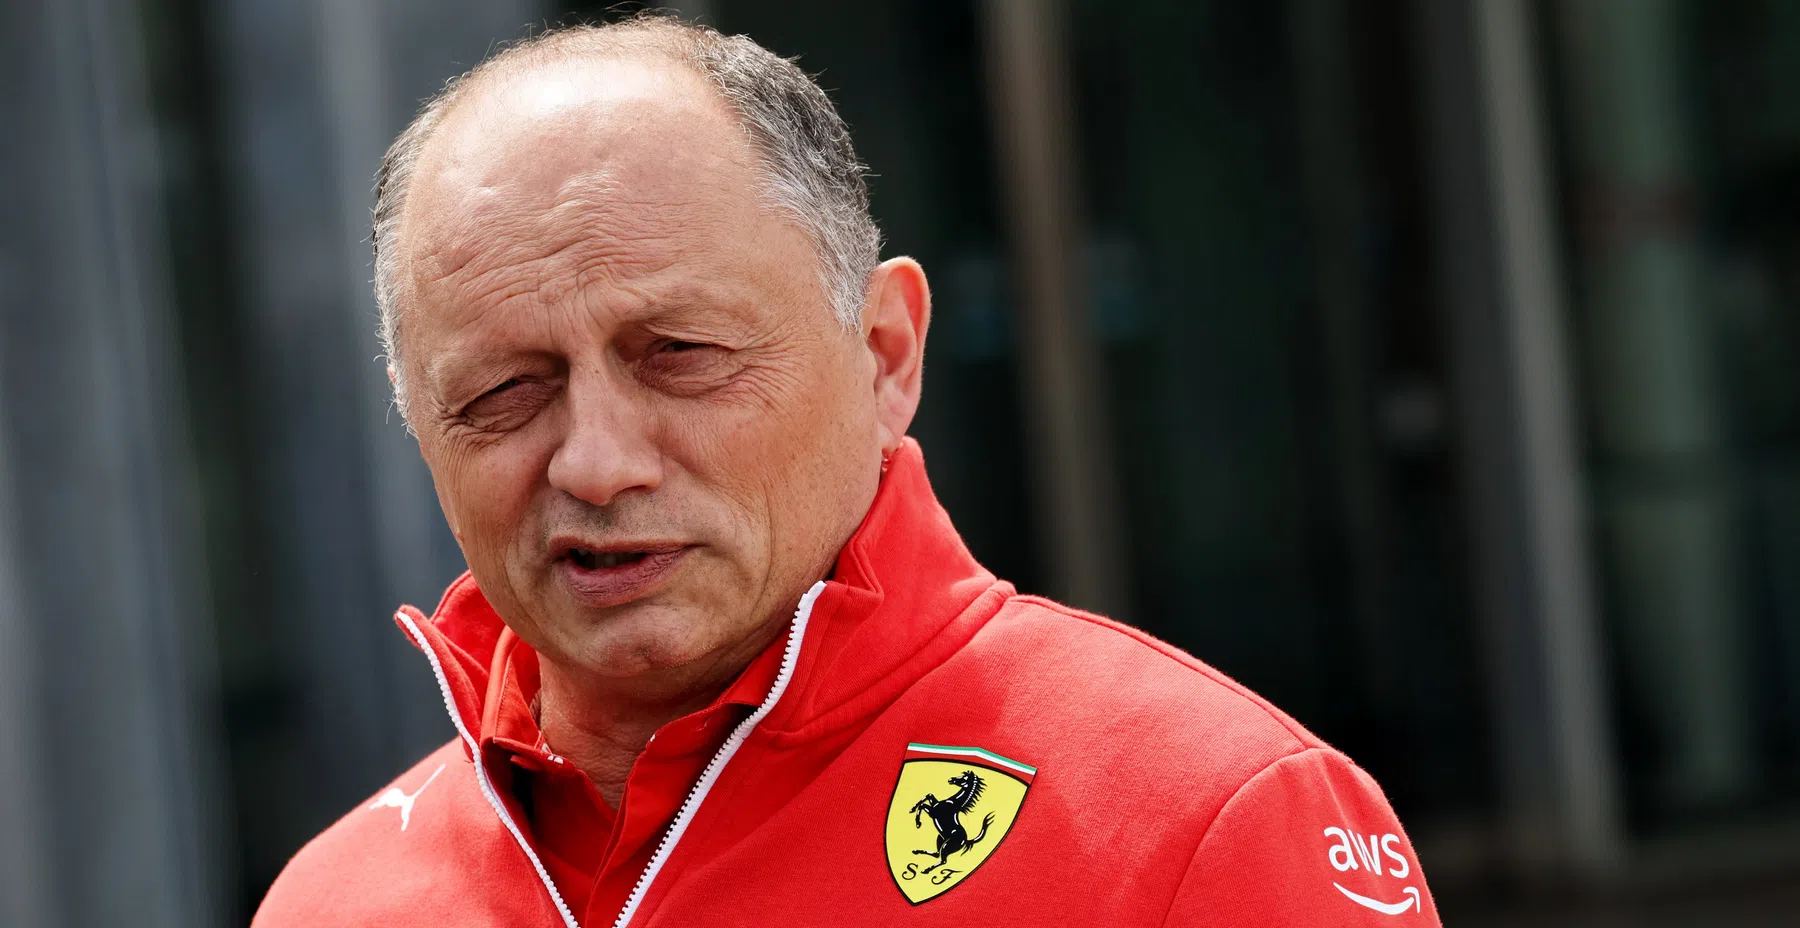 Ferrari team boss Vasseur on Newey's impact